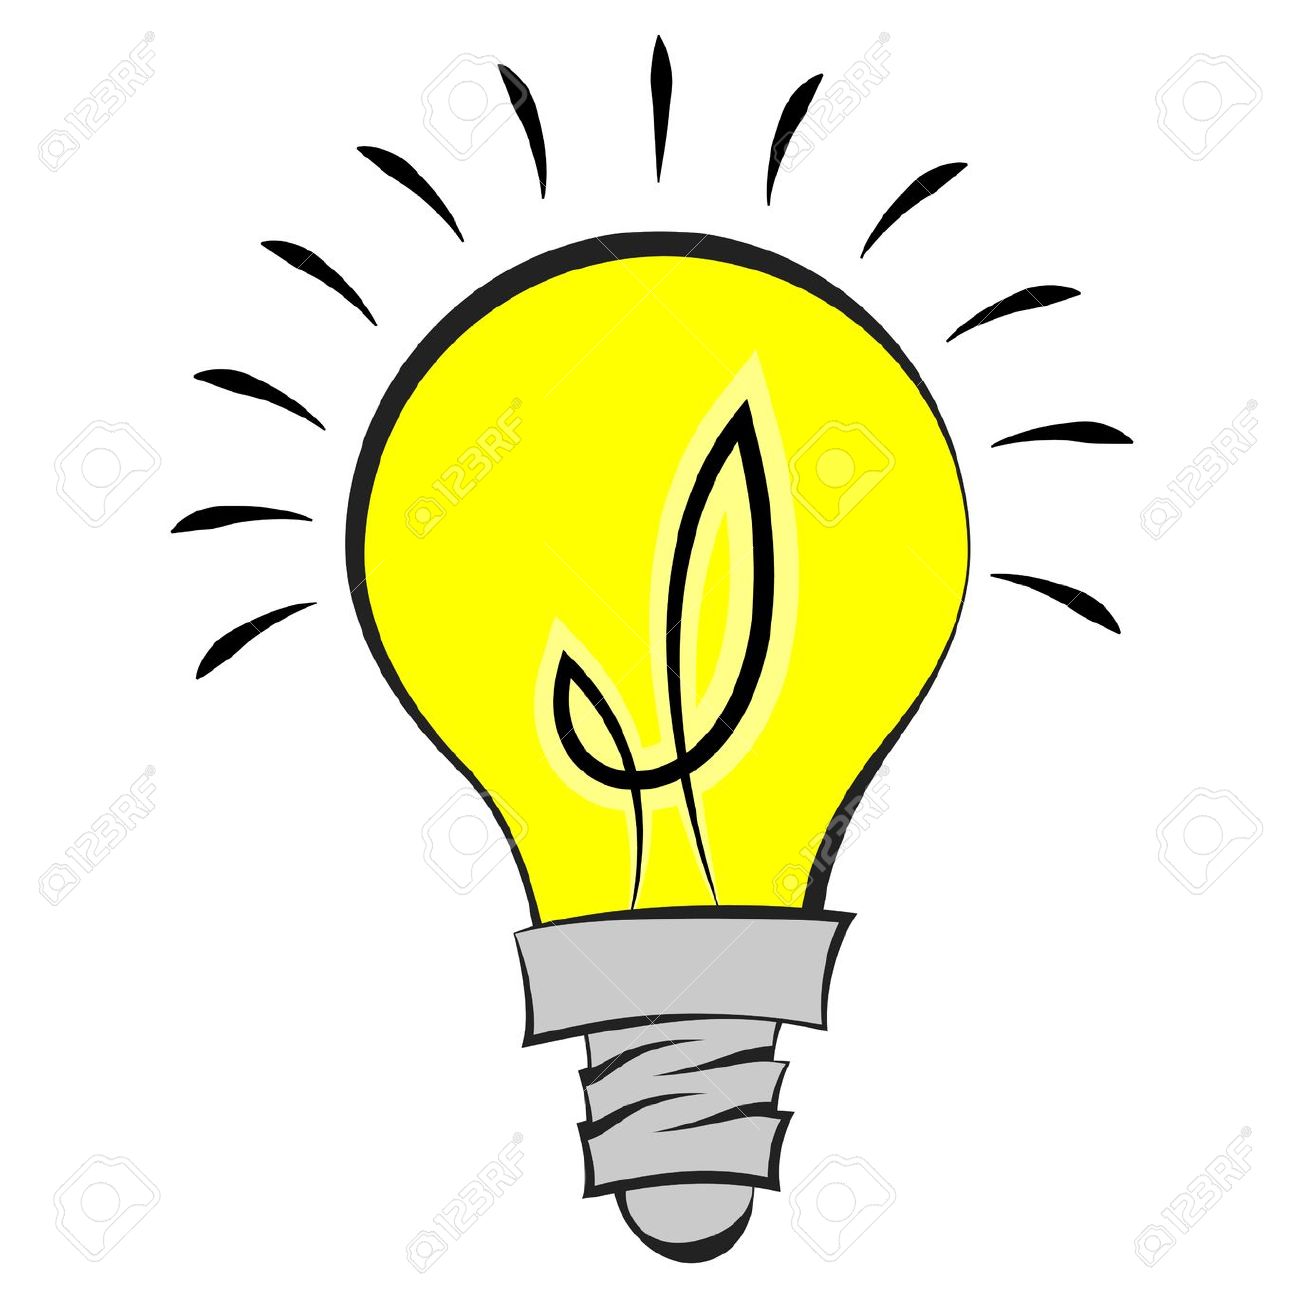 Light bulb clip art vector. Pictures of bulbs clipart